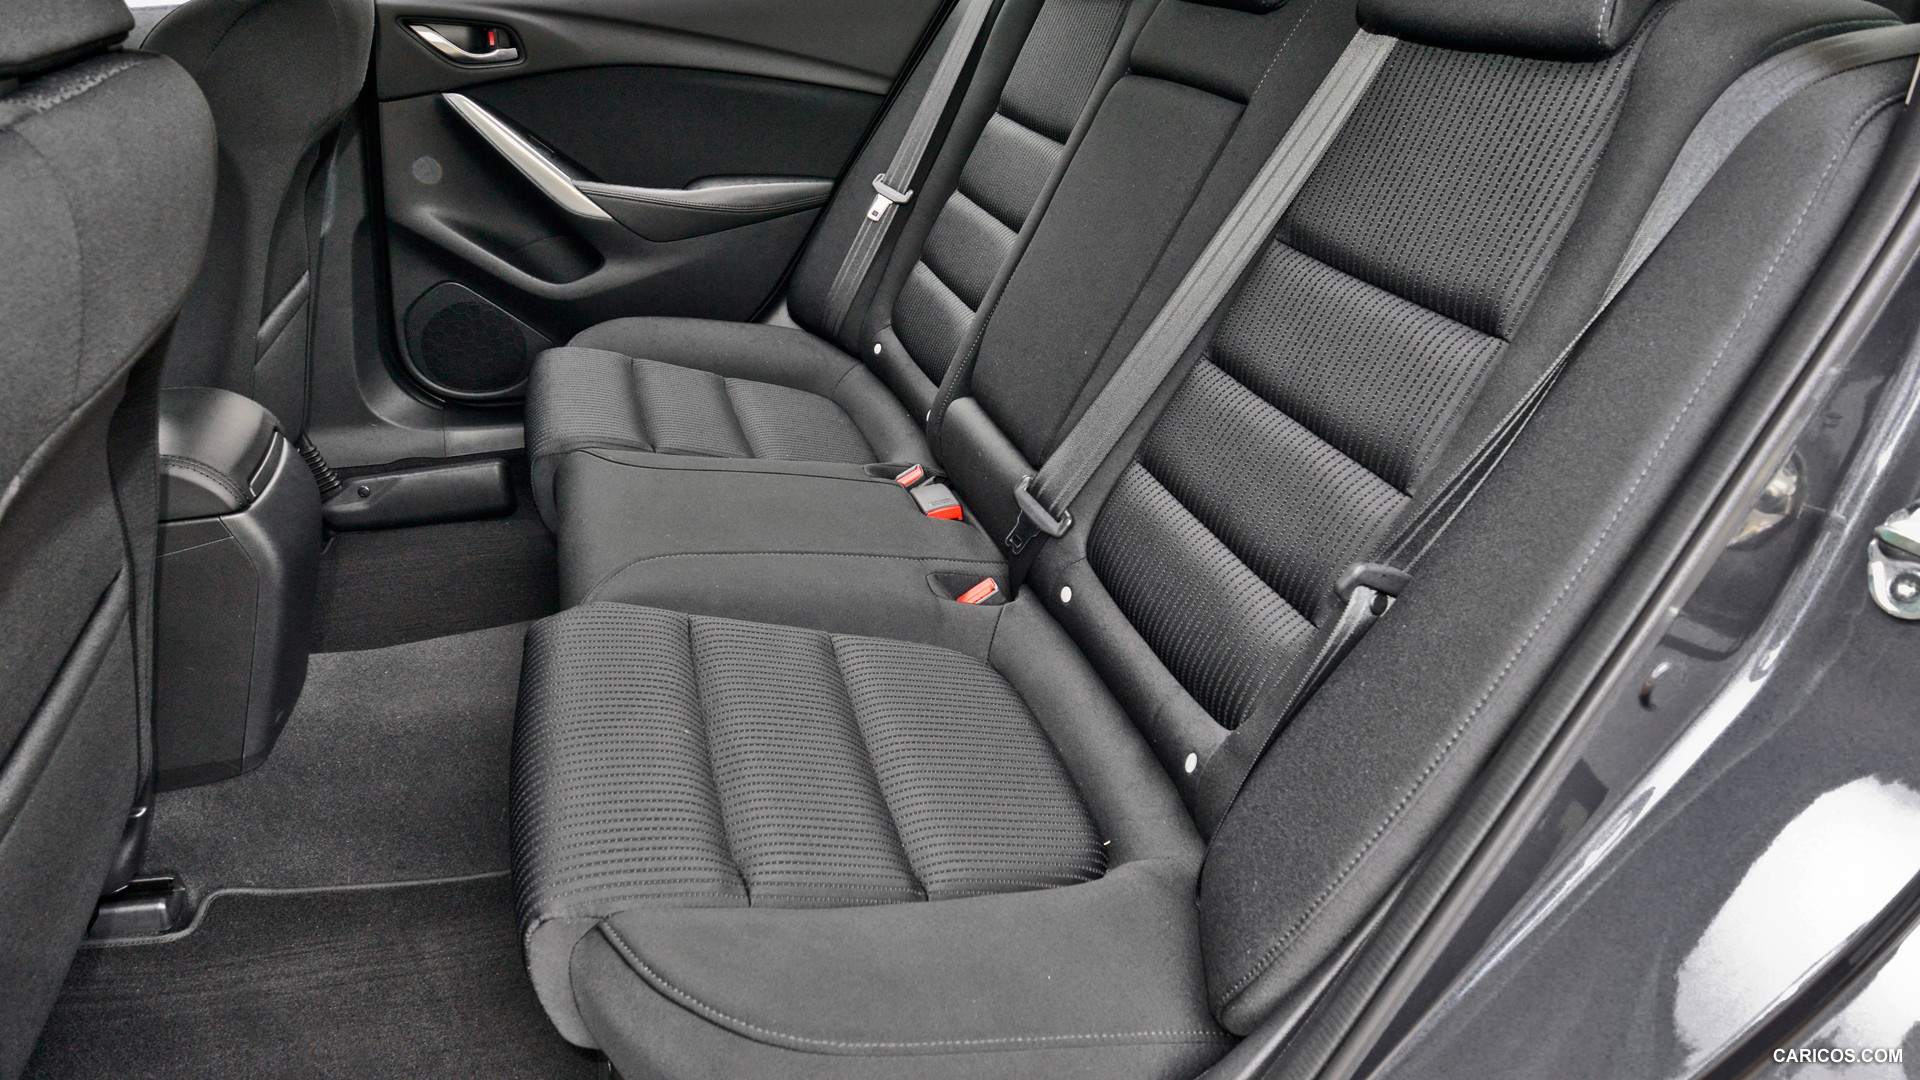 2014 Mazda6 Sport - Interior Rear Seats, #101 of 179